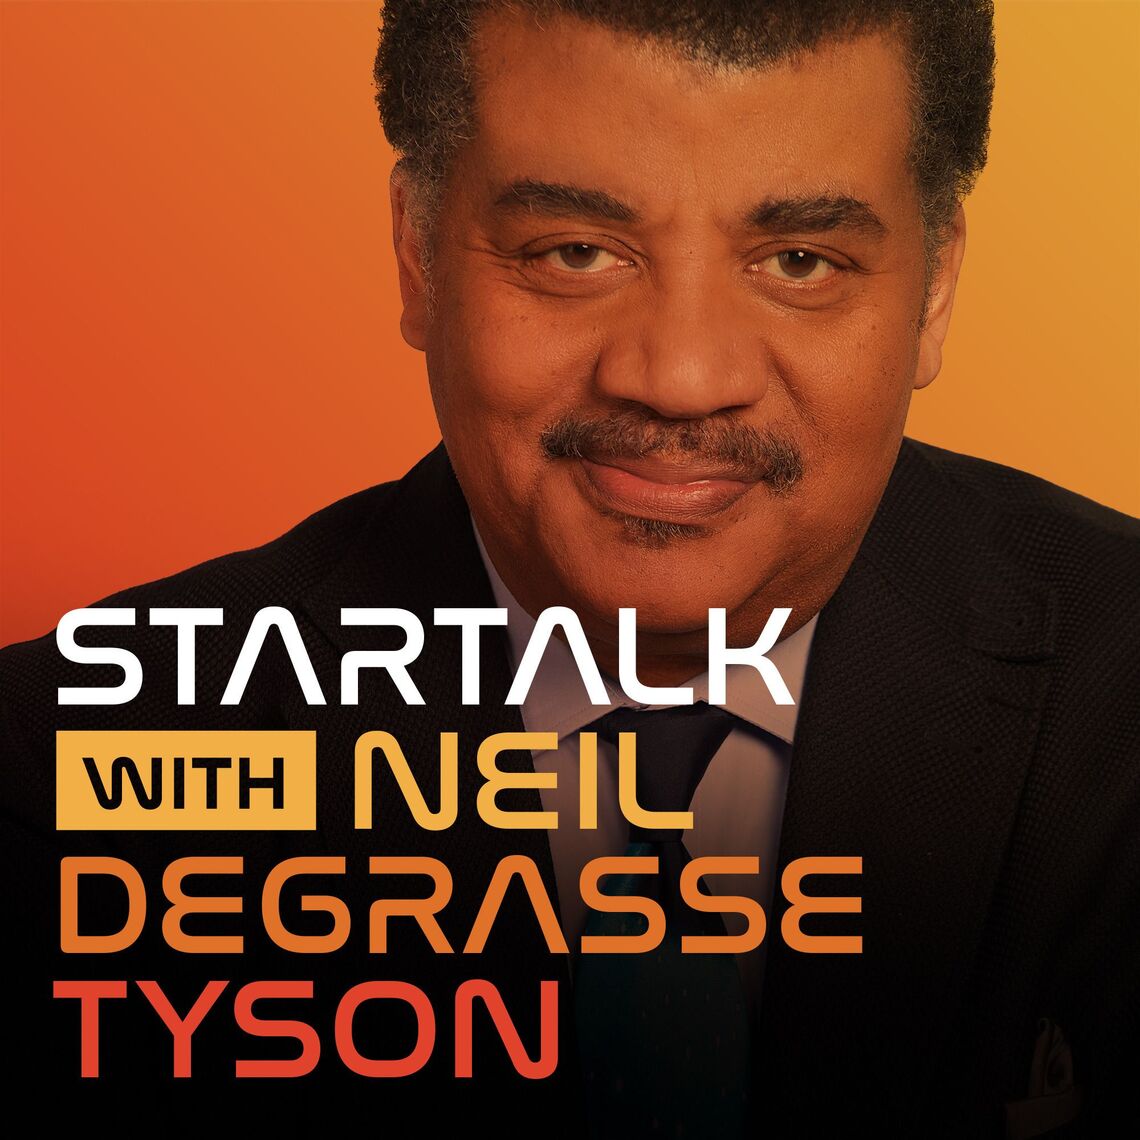 Neil deGrasse Tyson Breaks Down 'Interstellar': Black Holes, Time  Dilations, and Massive Waves